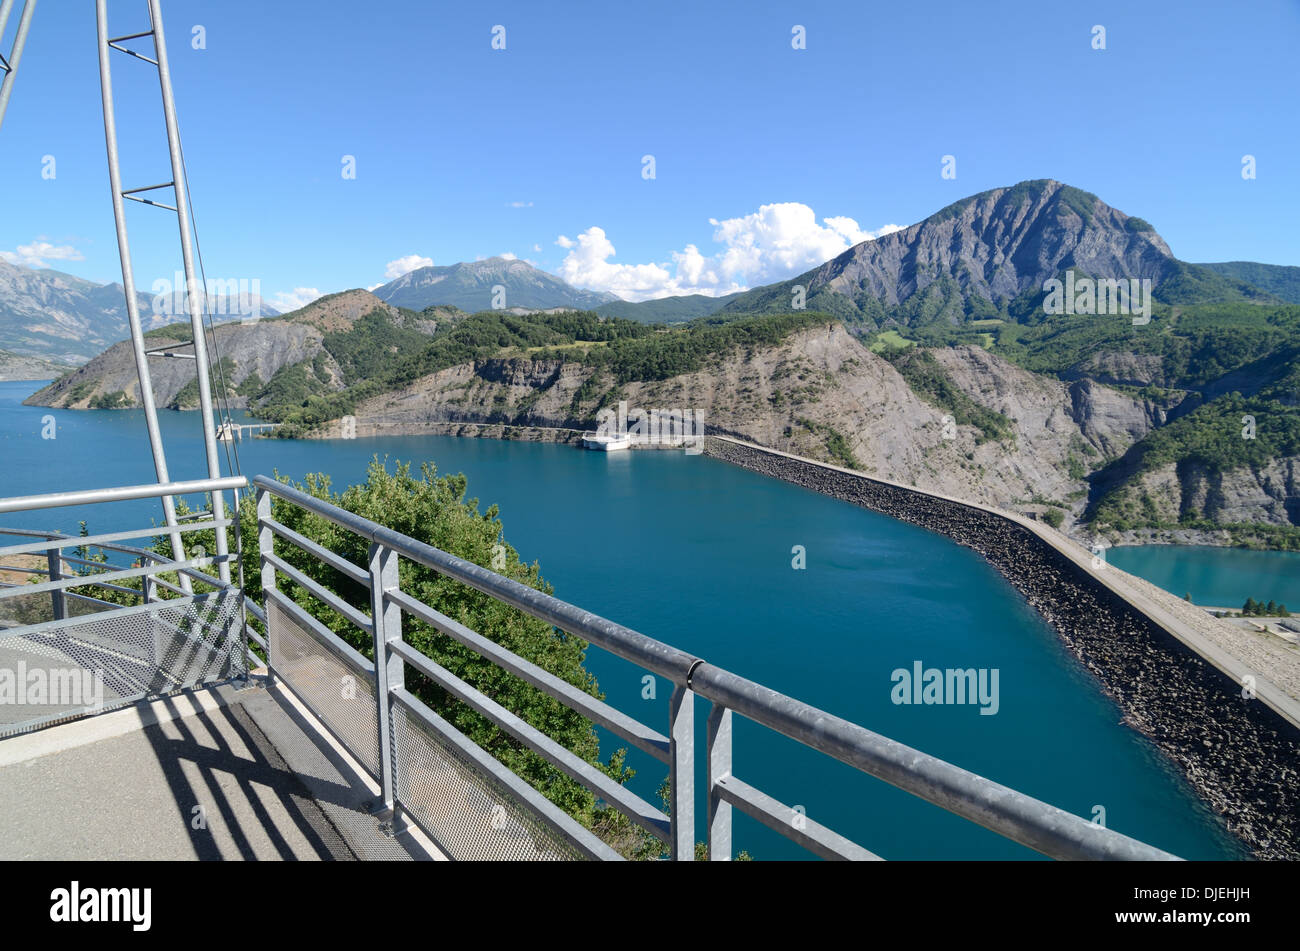 Viewing Platform or View Point overlooking Lac de Serre-Ponçon or Serre Poncon Lake, Reservoir Barrage and Dam Hautes-Alpes or Hautes Alps France Stock Photo